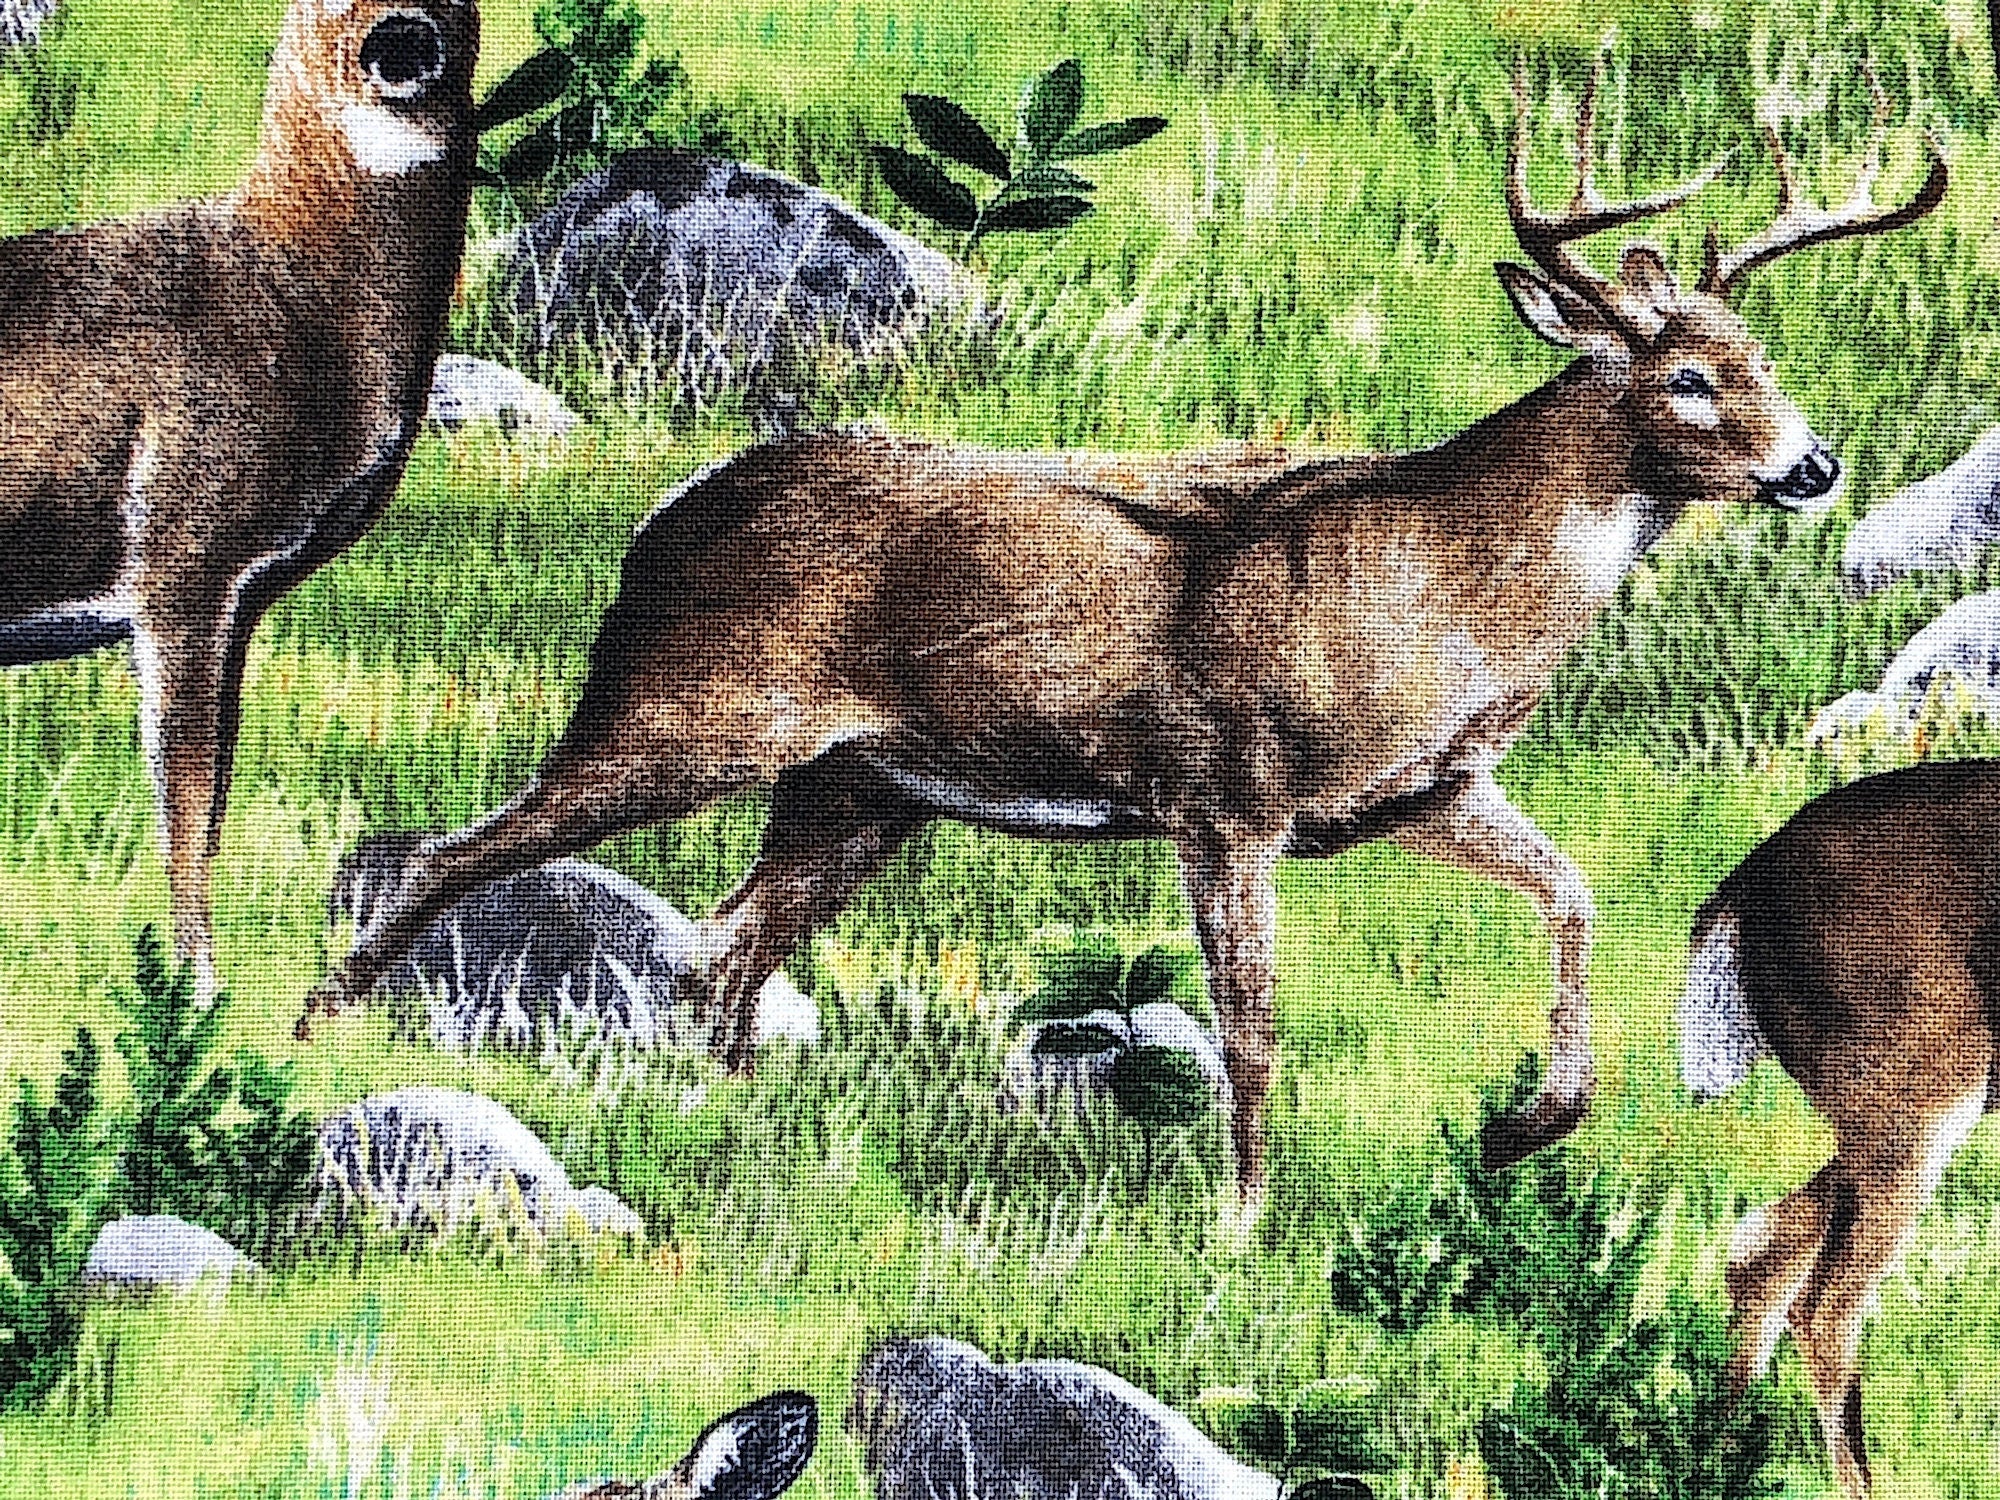 Close up  of a deer running in a field.